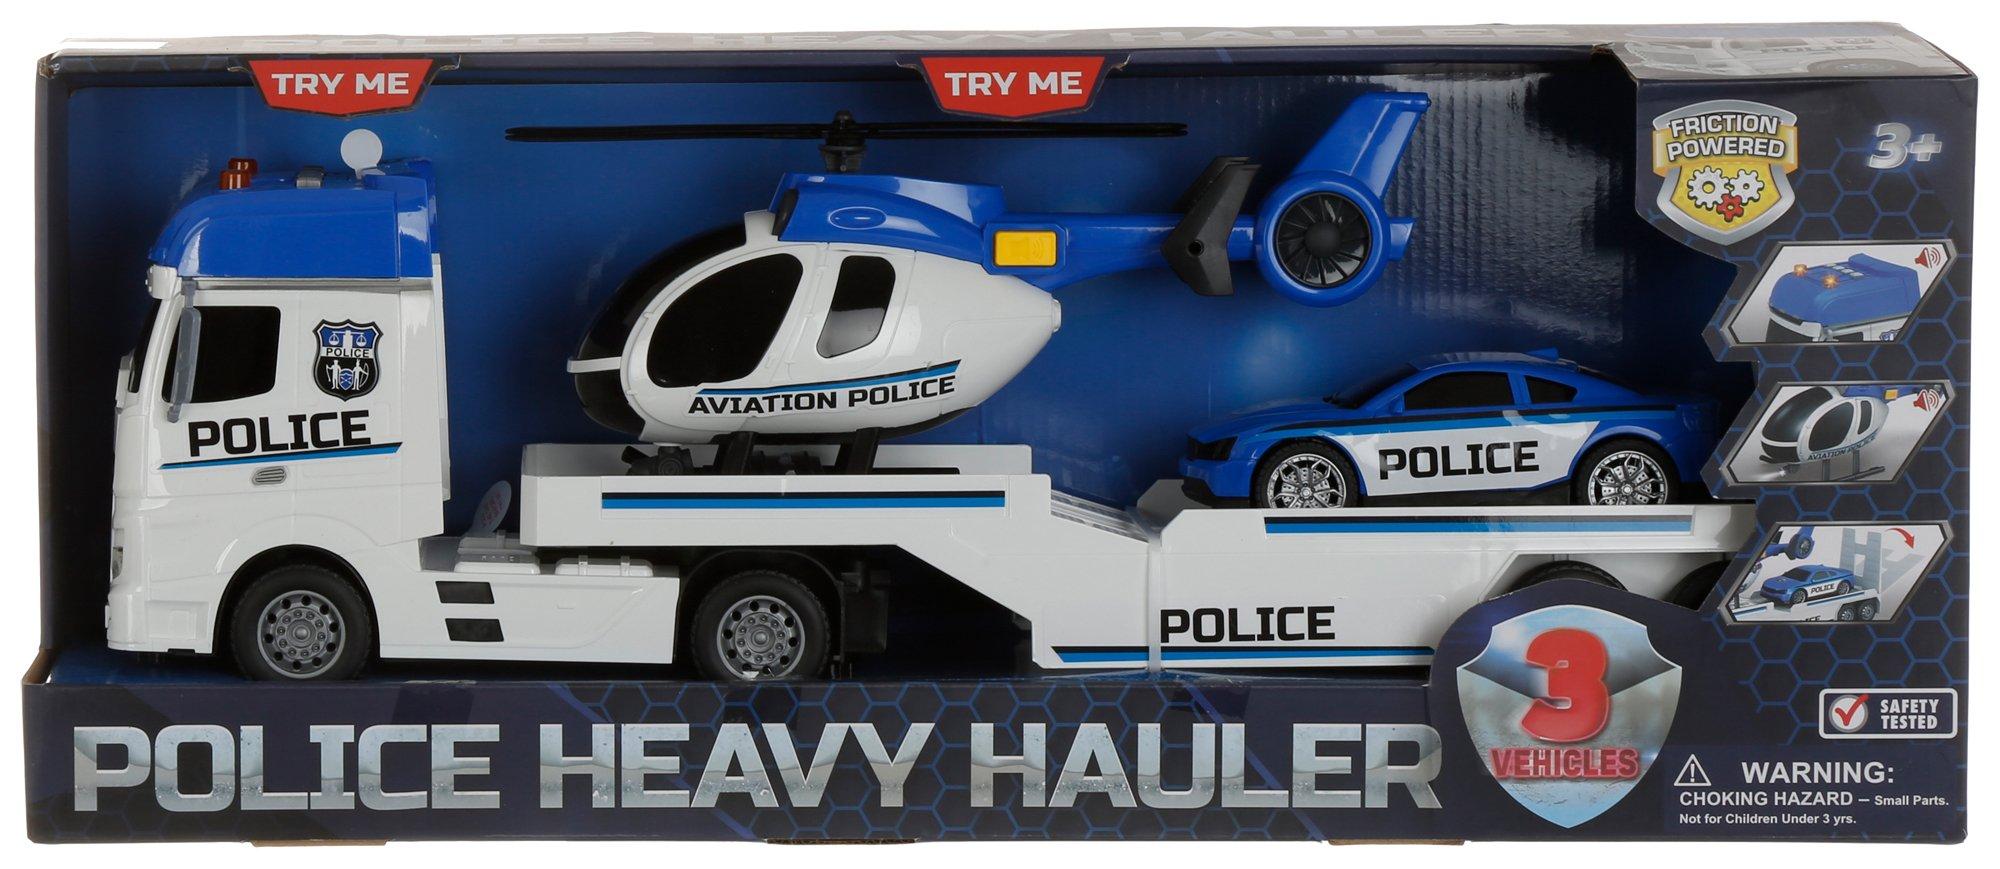 Police Heavy Hauler Truck